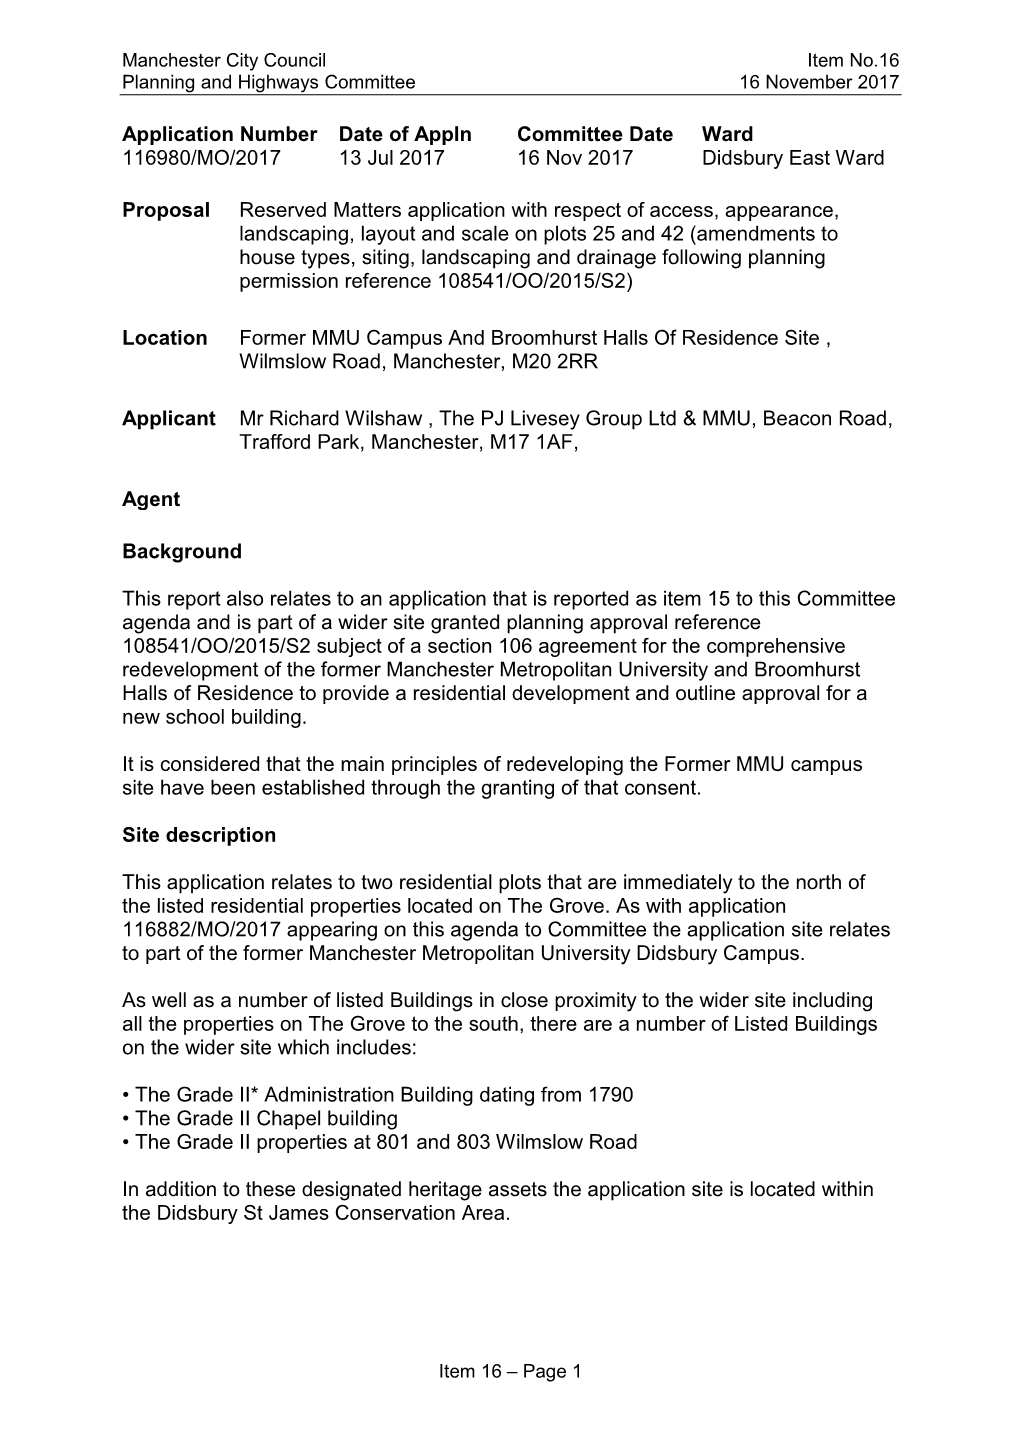 Planning and Highways Committee Item 16. MMU Broomhurst Hall.Rtf